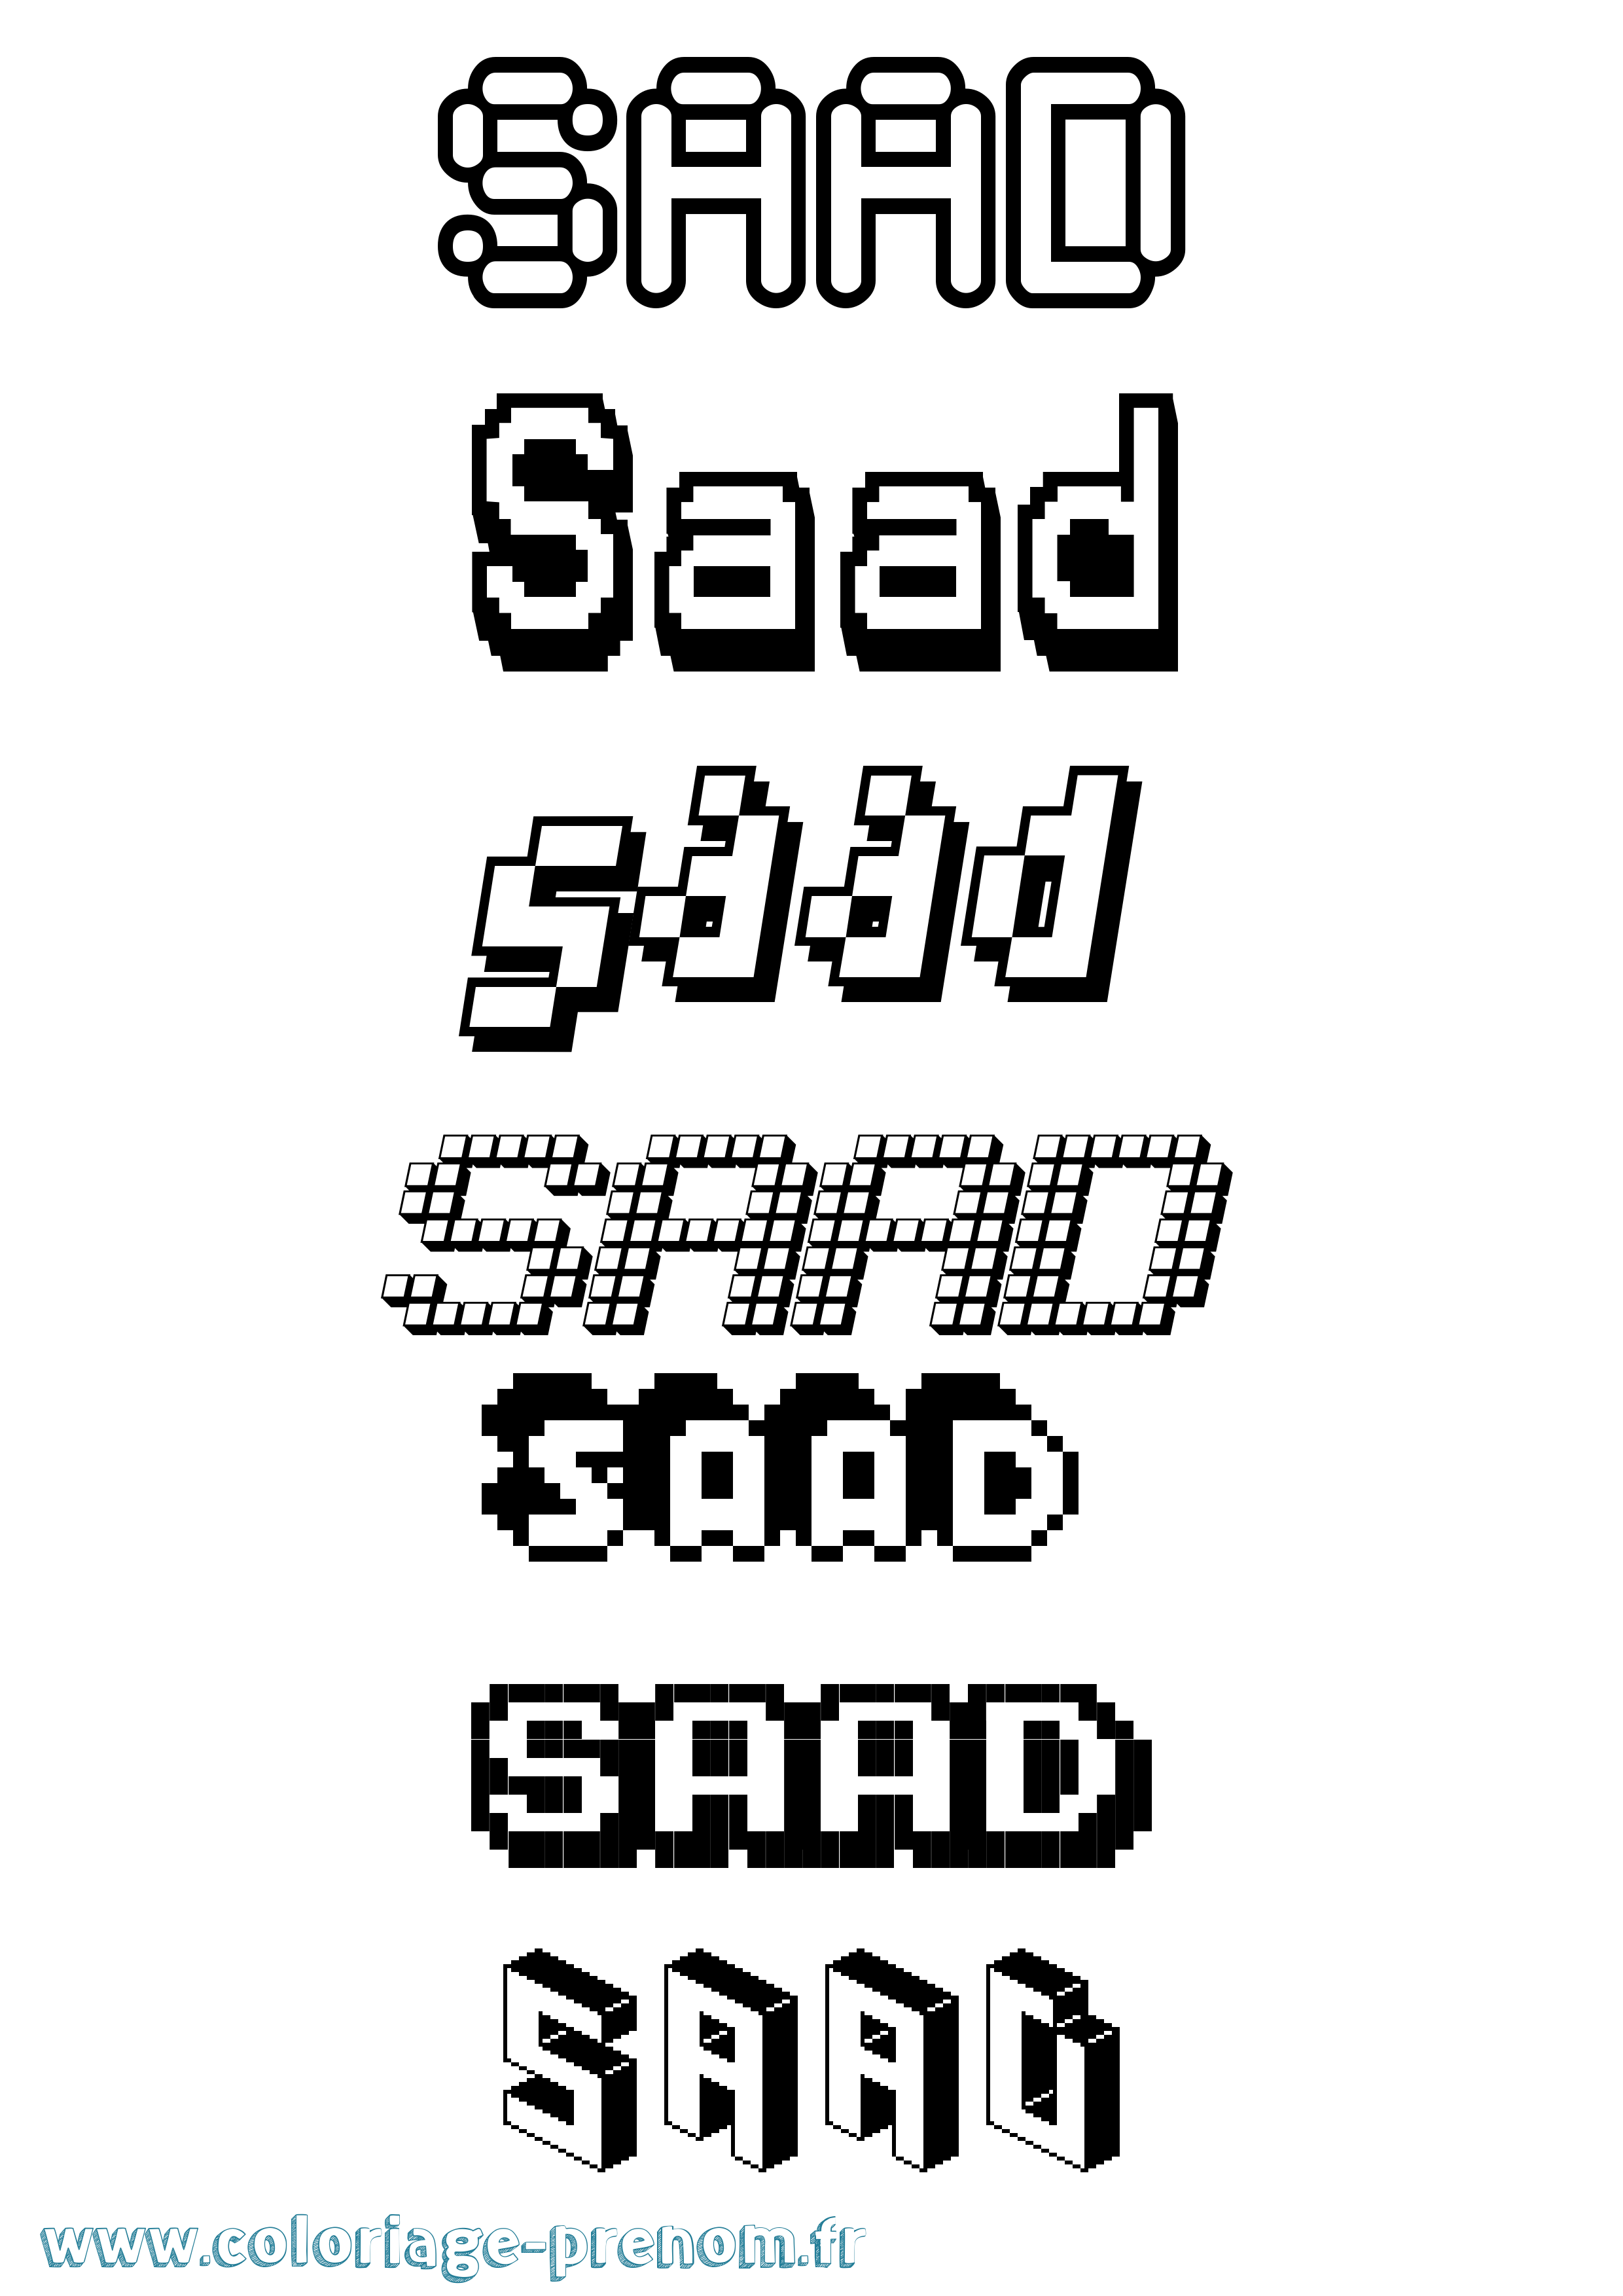 Coloriage prénom Saad Pixel